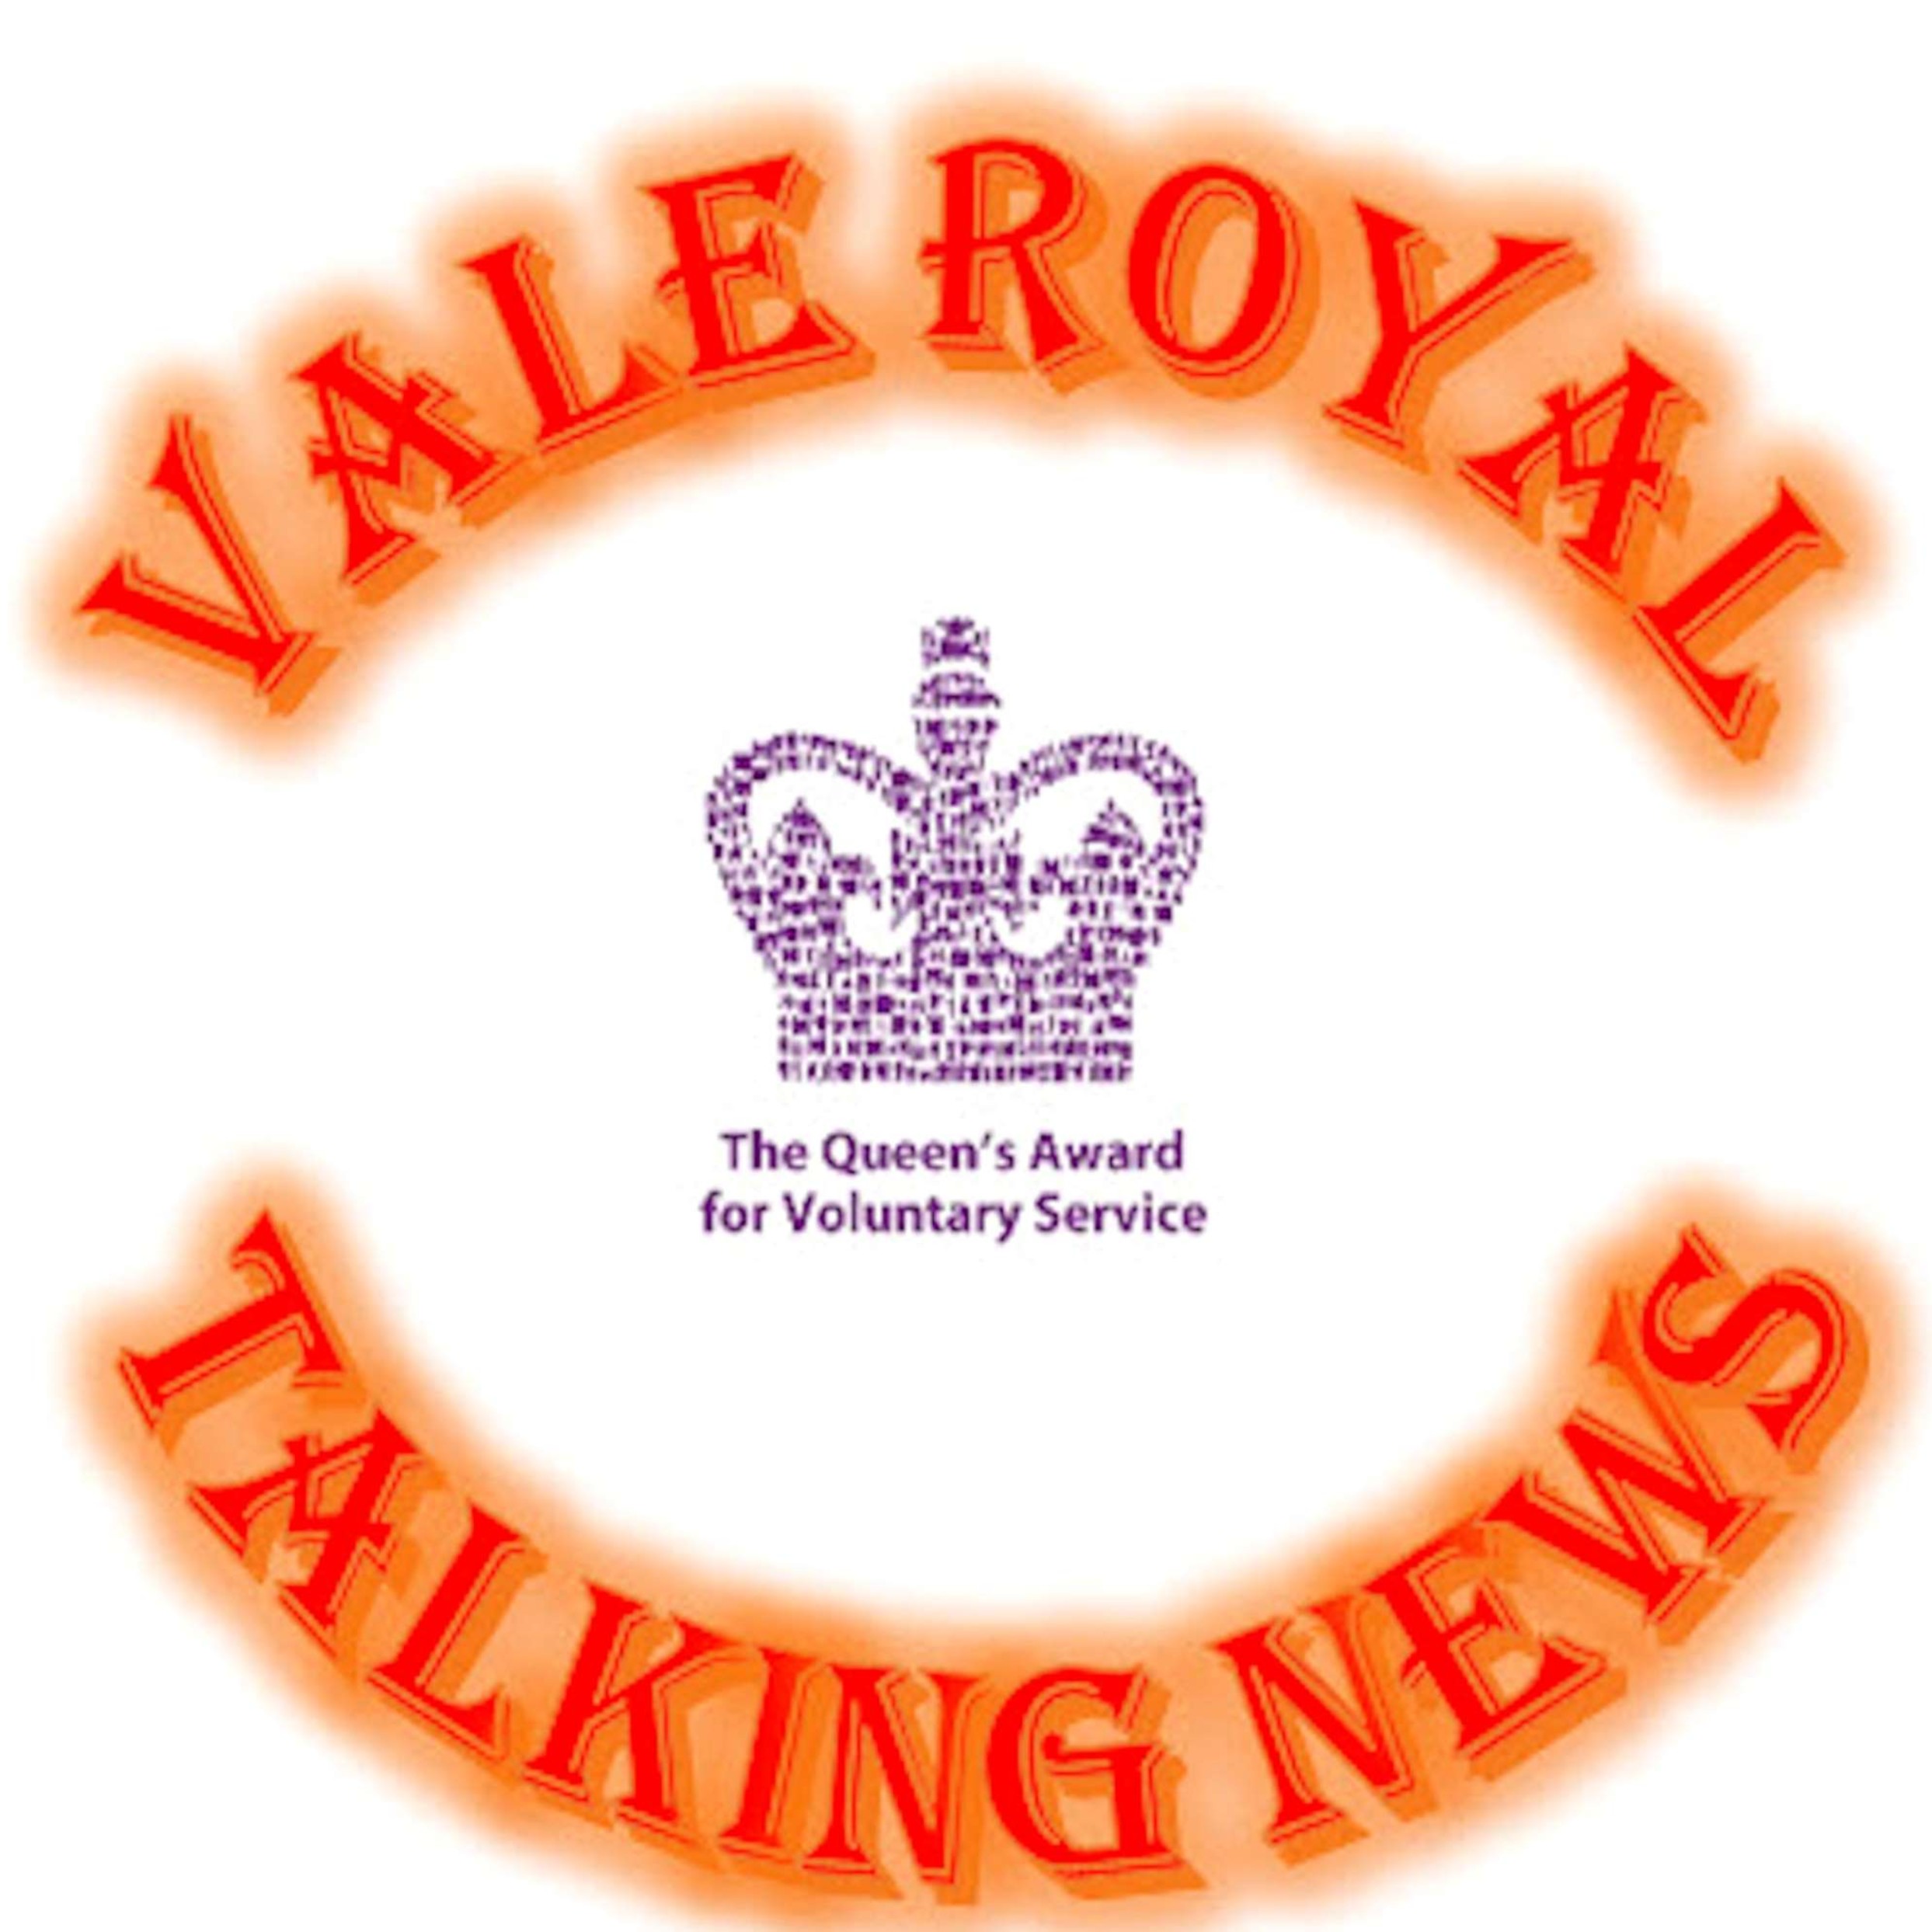 Vale Royal Talking News